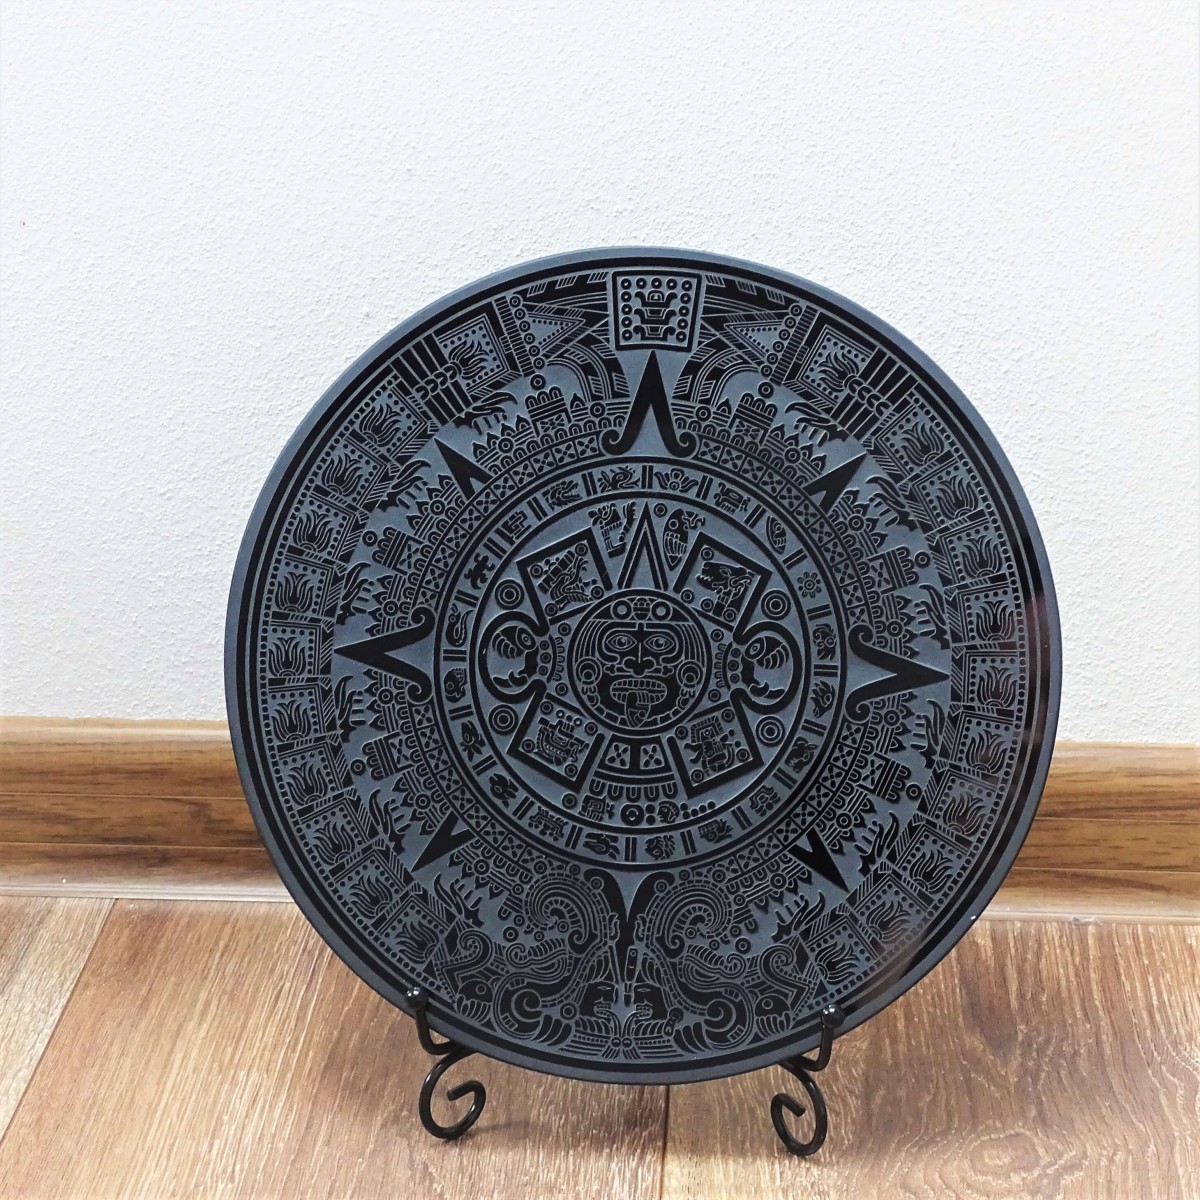 Obsidian mirror Aztec calendar - 18cm, Mexico